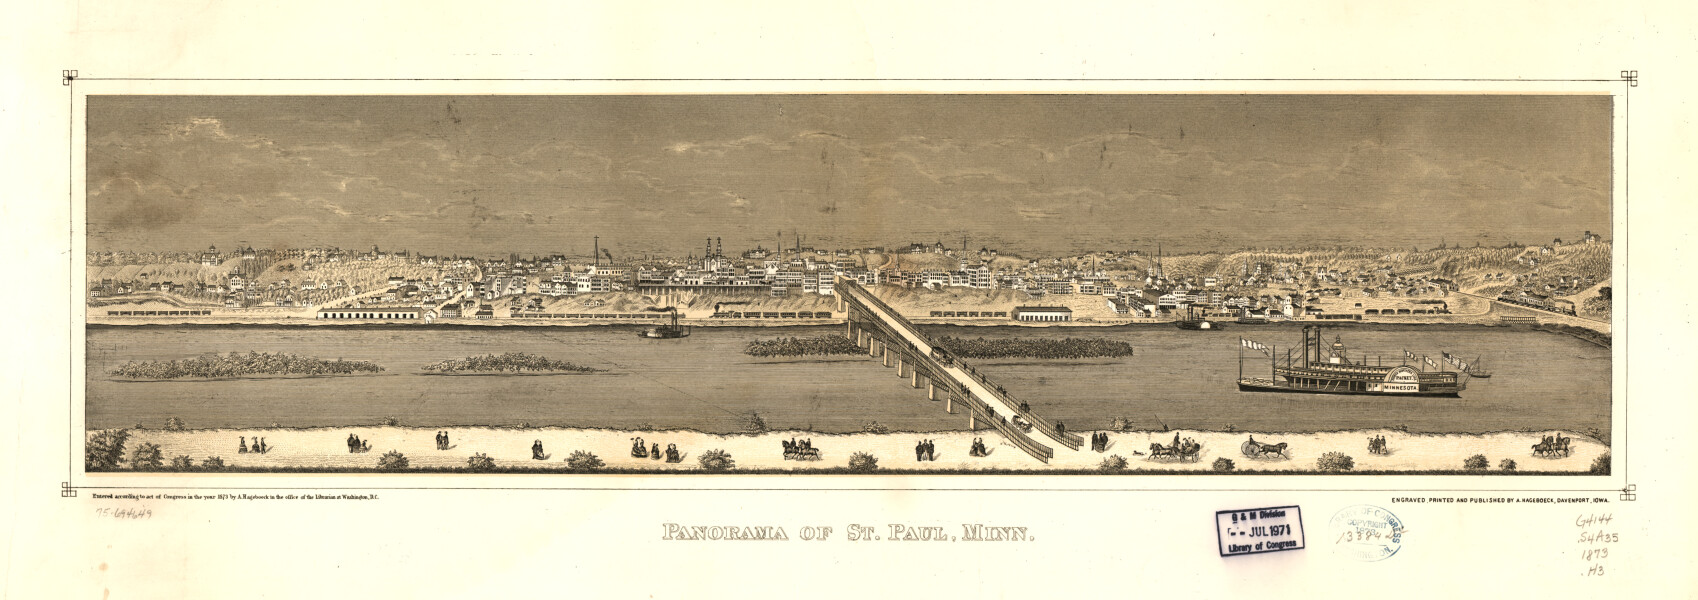 E66 - Panorama of St Paul Minnesota - 1873